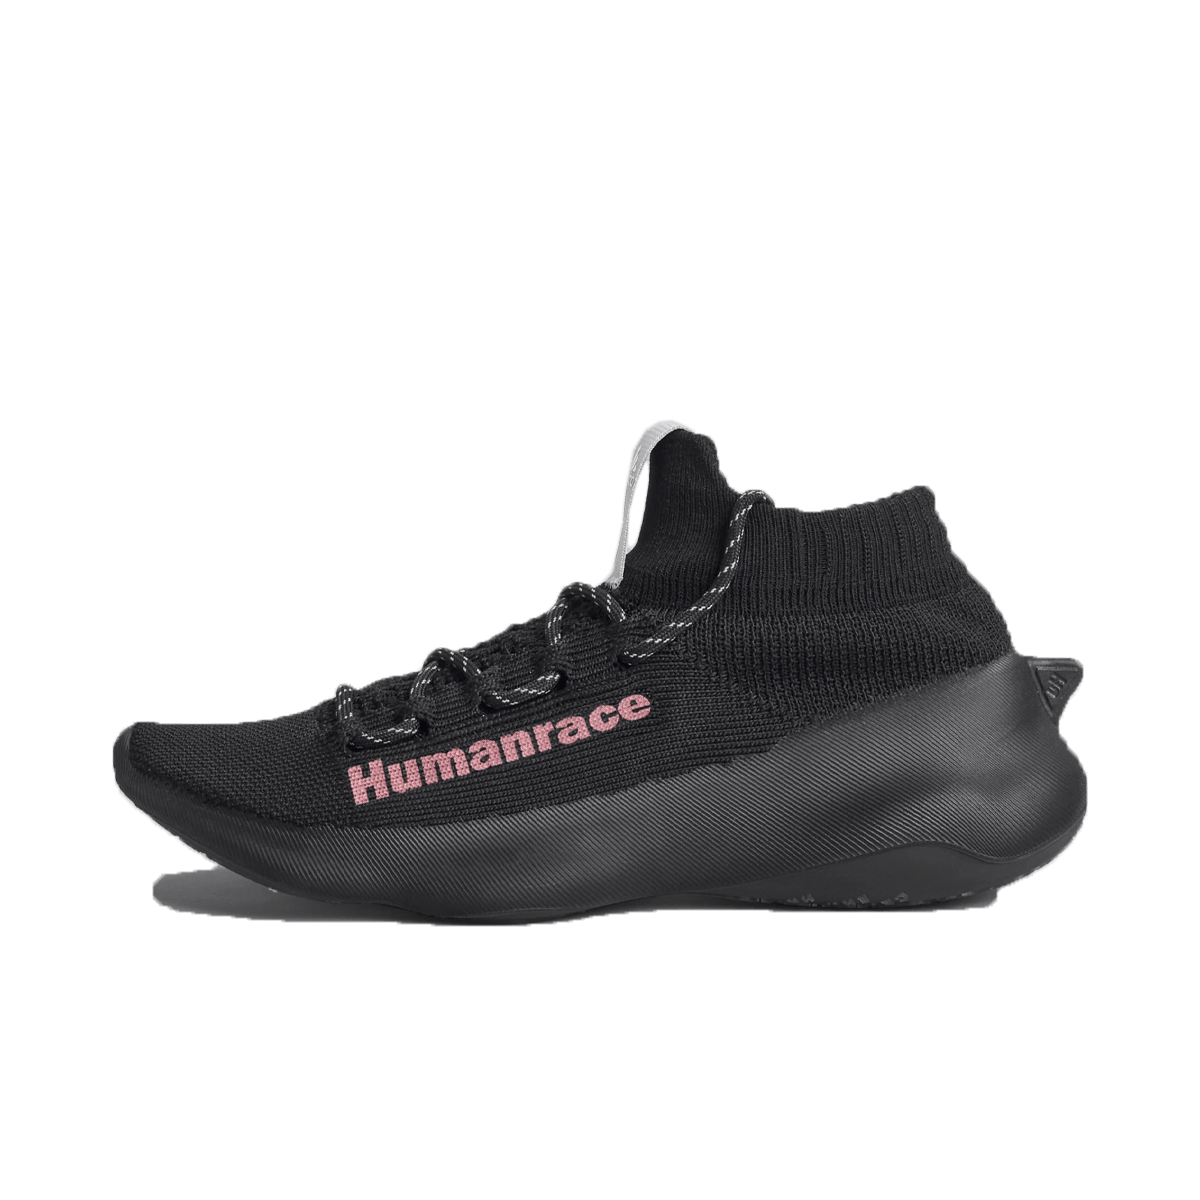 adidas Humanrace Sičhona 'Black' GX3032